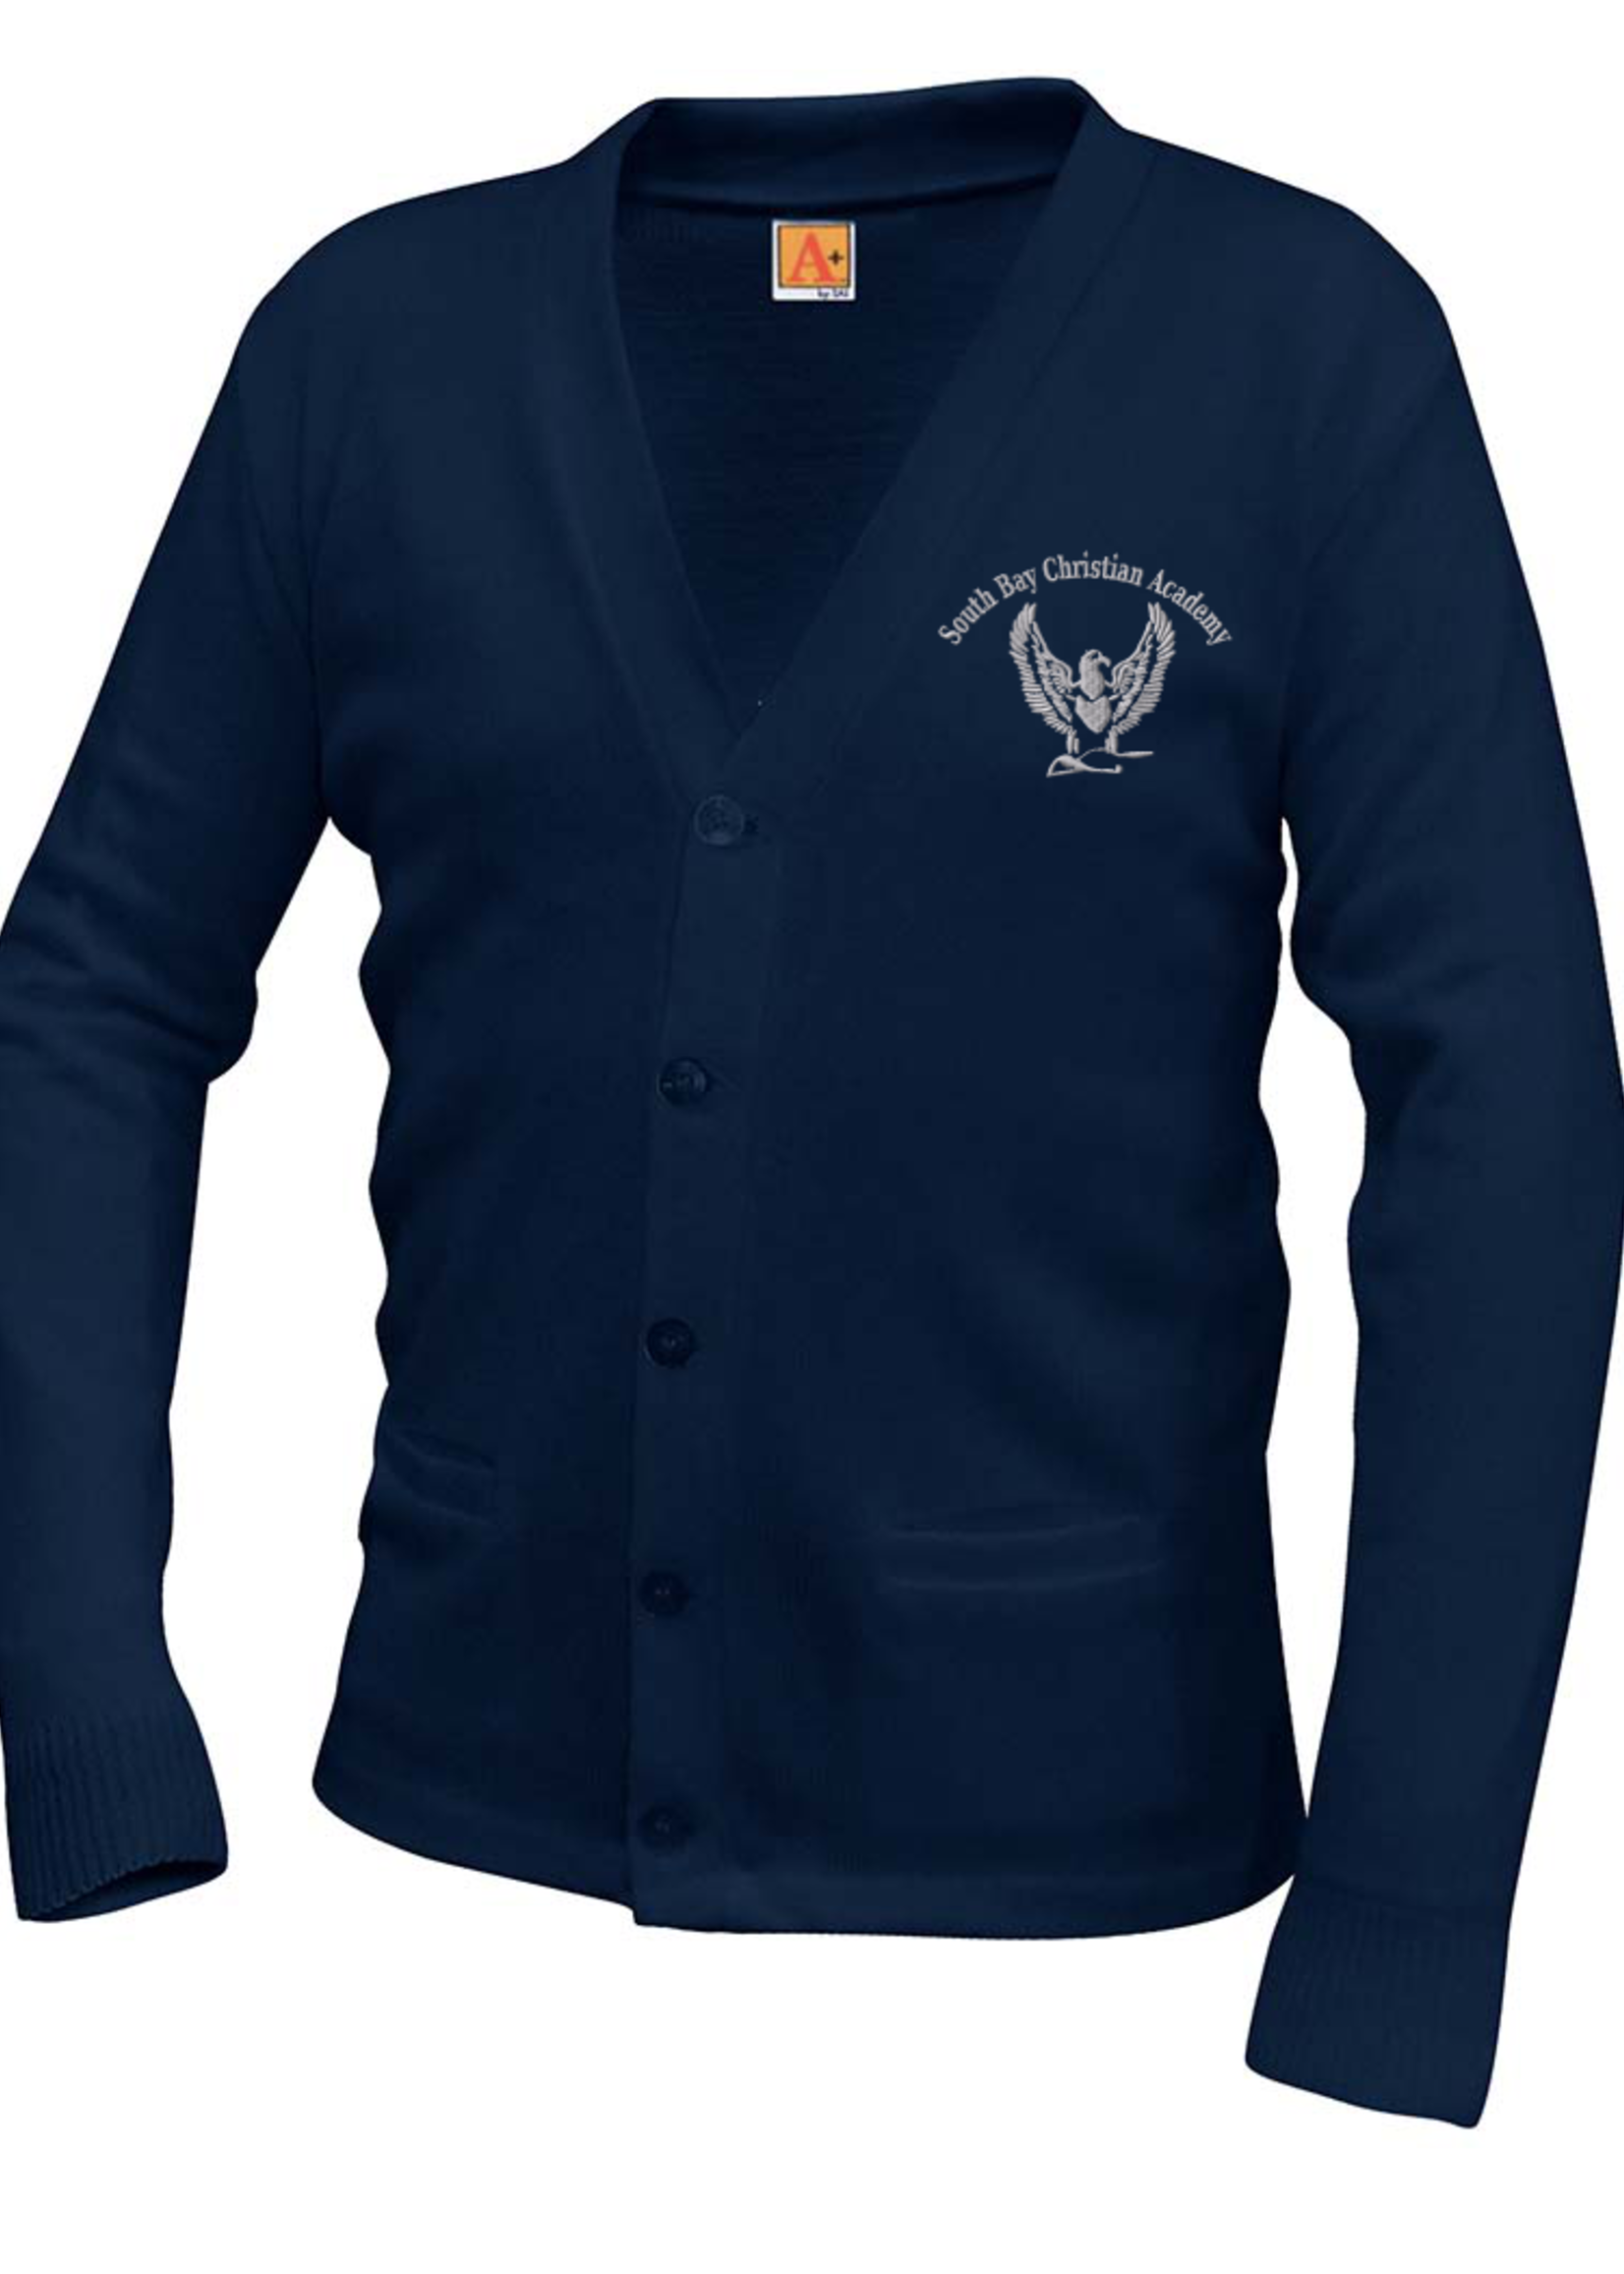 SBCA V-neck cardigan sweater with pockets